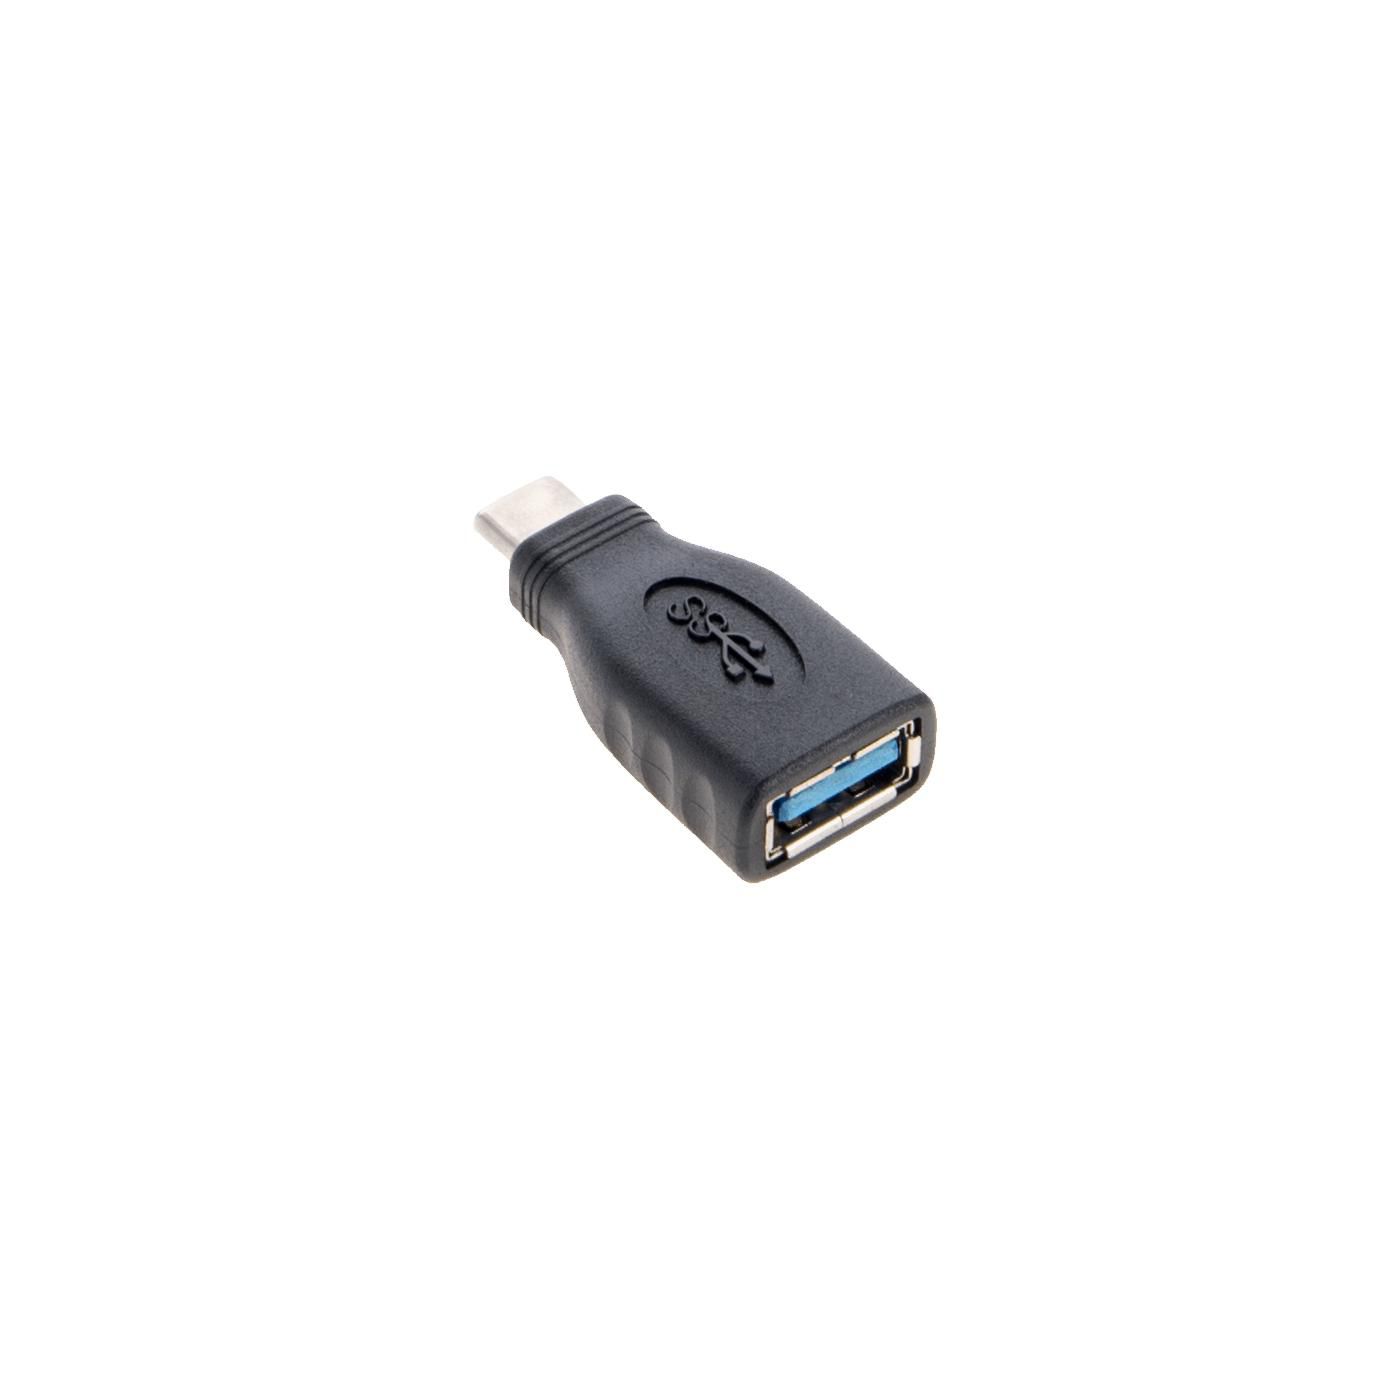 Jabra USB-C Adapter 14208-14, 